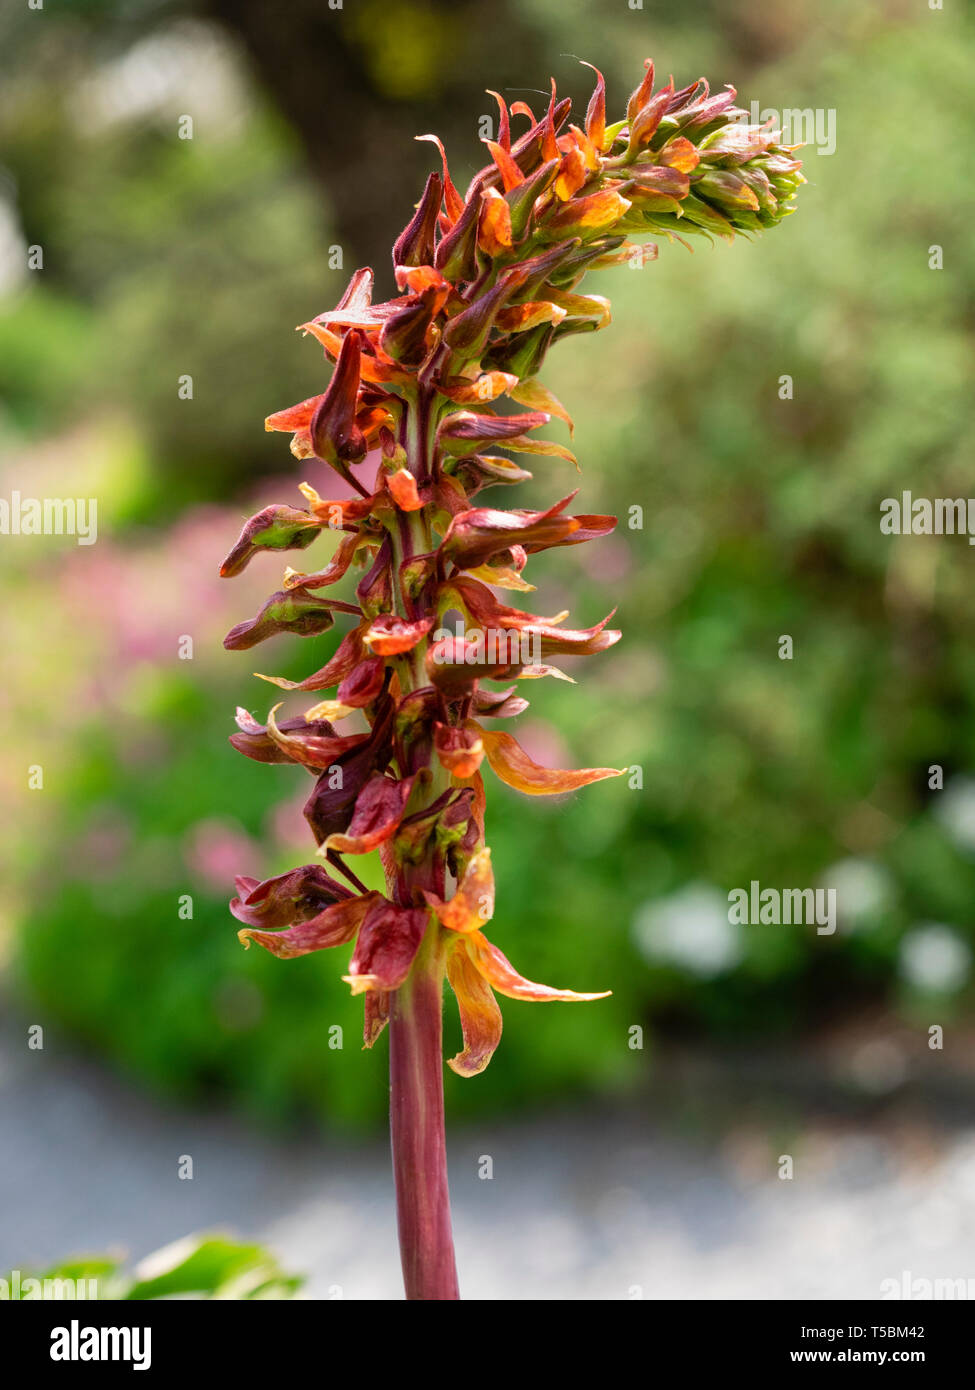 Rot-braune Blume spike Der Frühling blüht, winterharte, exotischer Garten Pflanze, Melianthus major Stockfoto